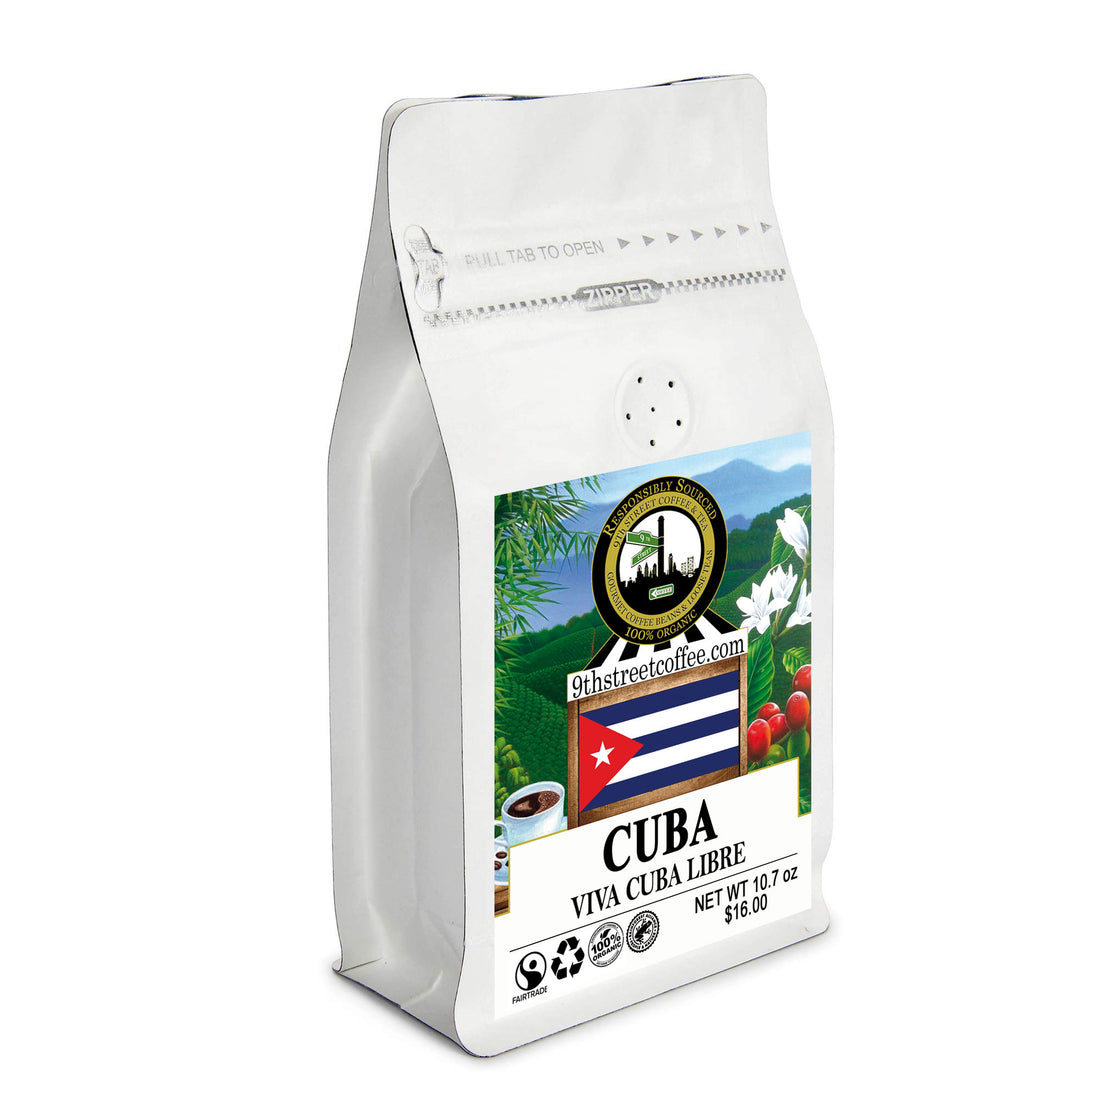 Organic Cuban Viva Cuba Libre Coffee